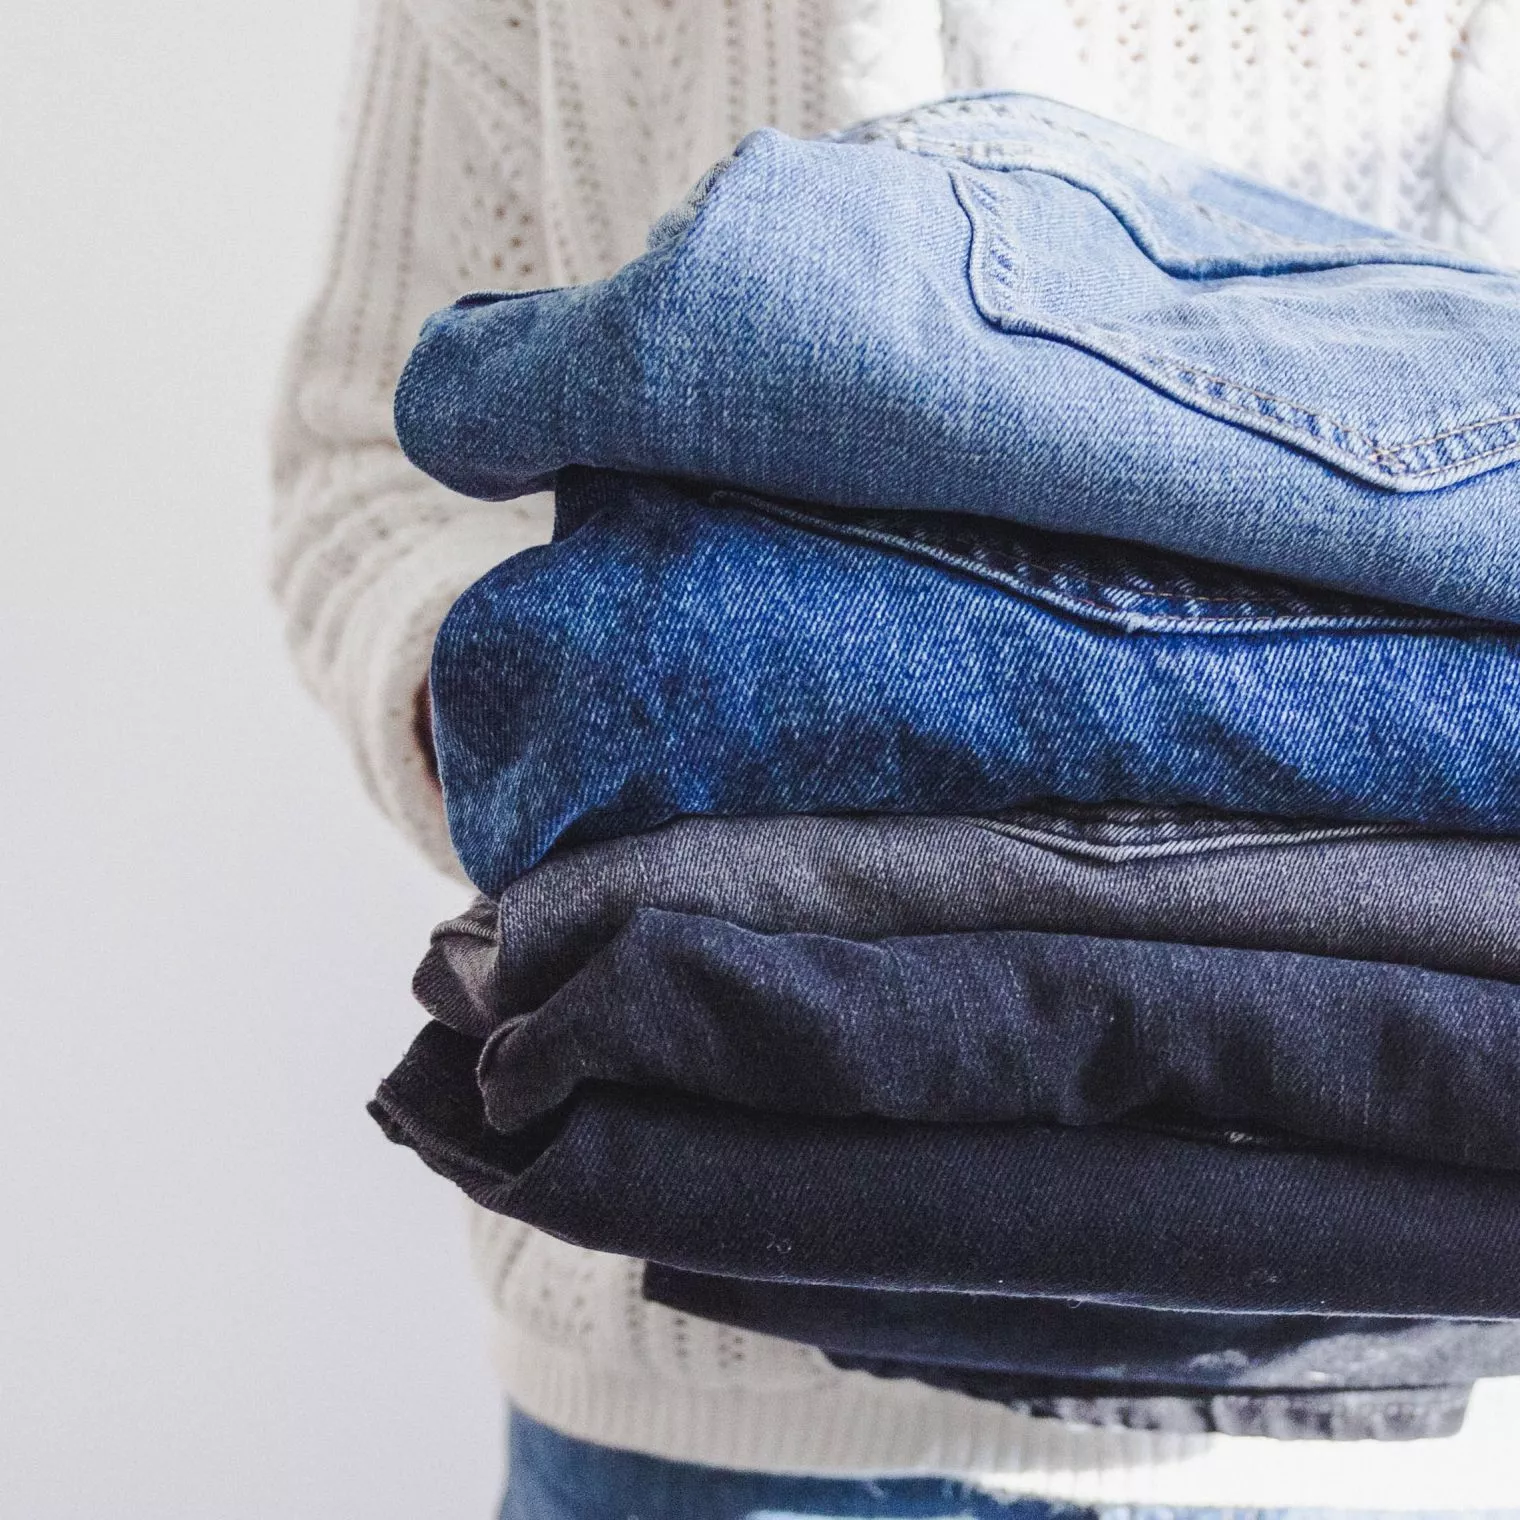 Benarkah Semakin Lama Tidak Dicuci, Jeans akan Semakin Keren?